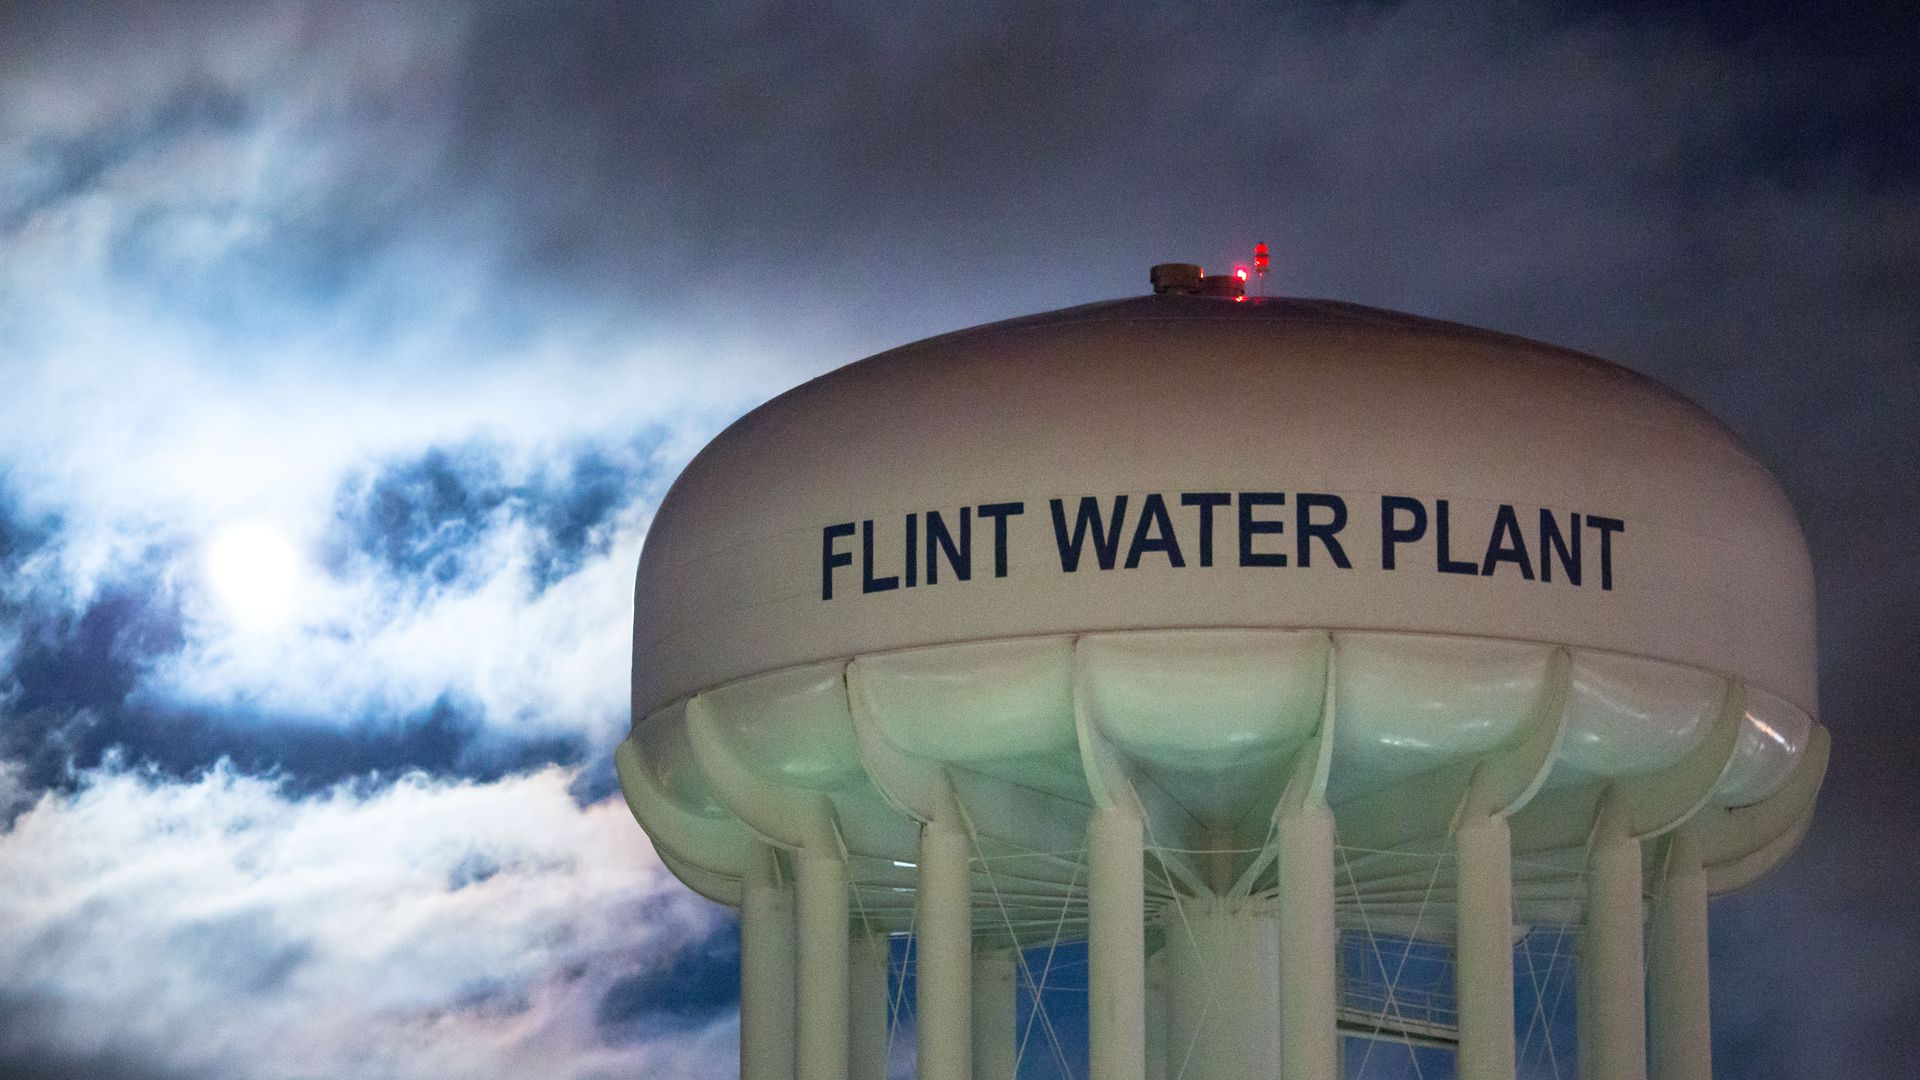 Water plant in Flint, Michigan